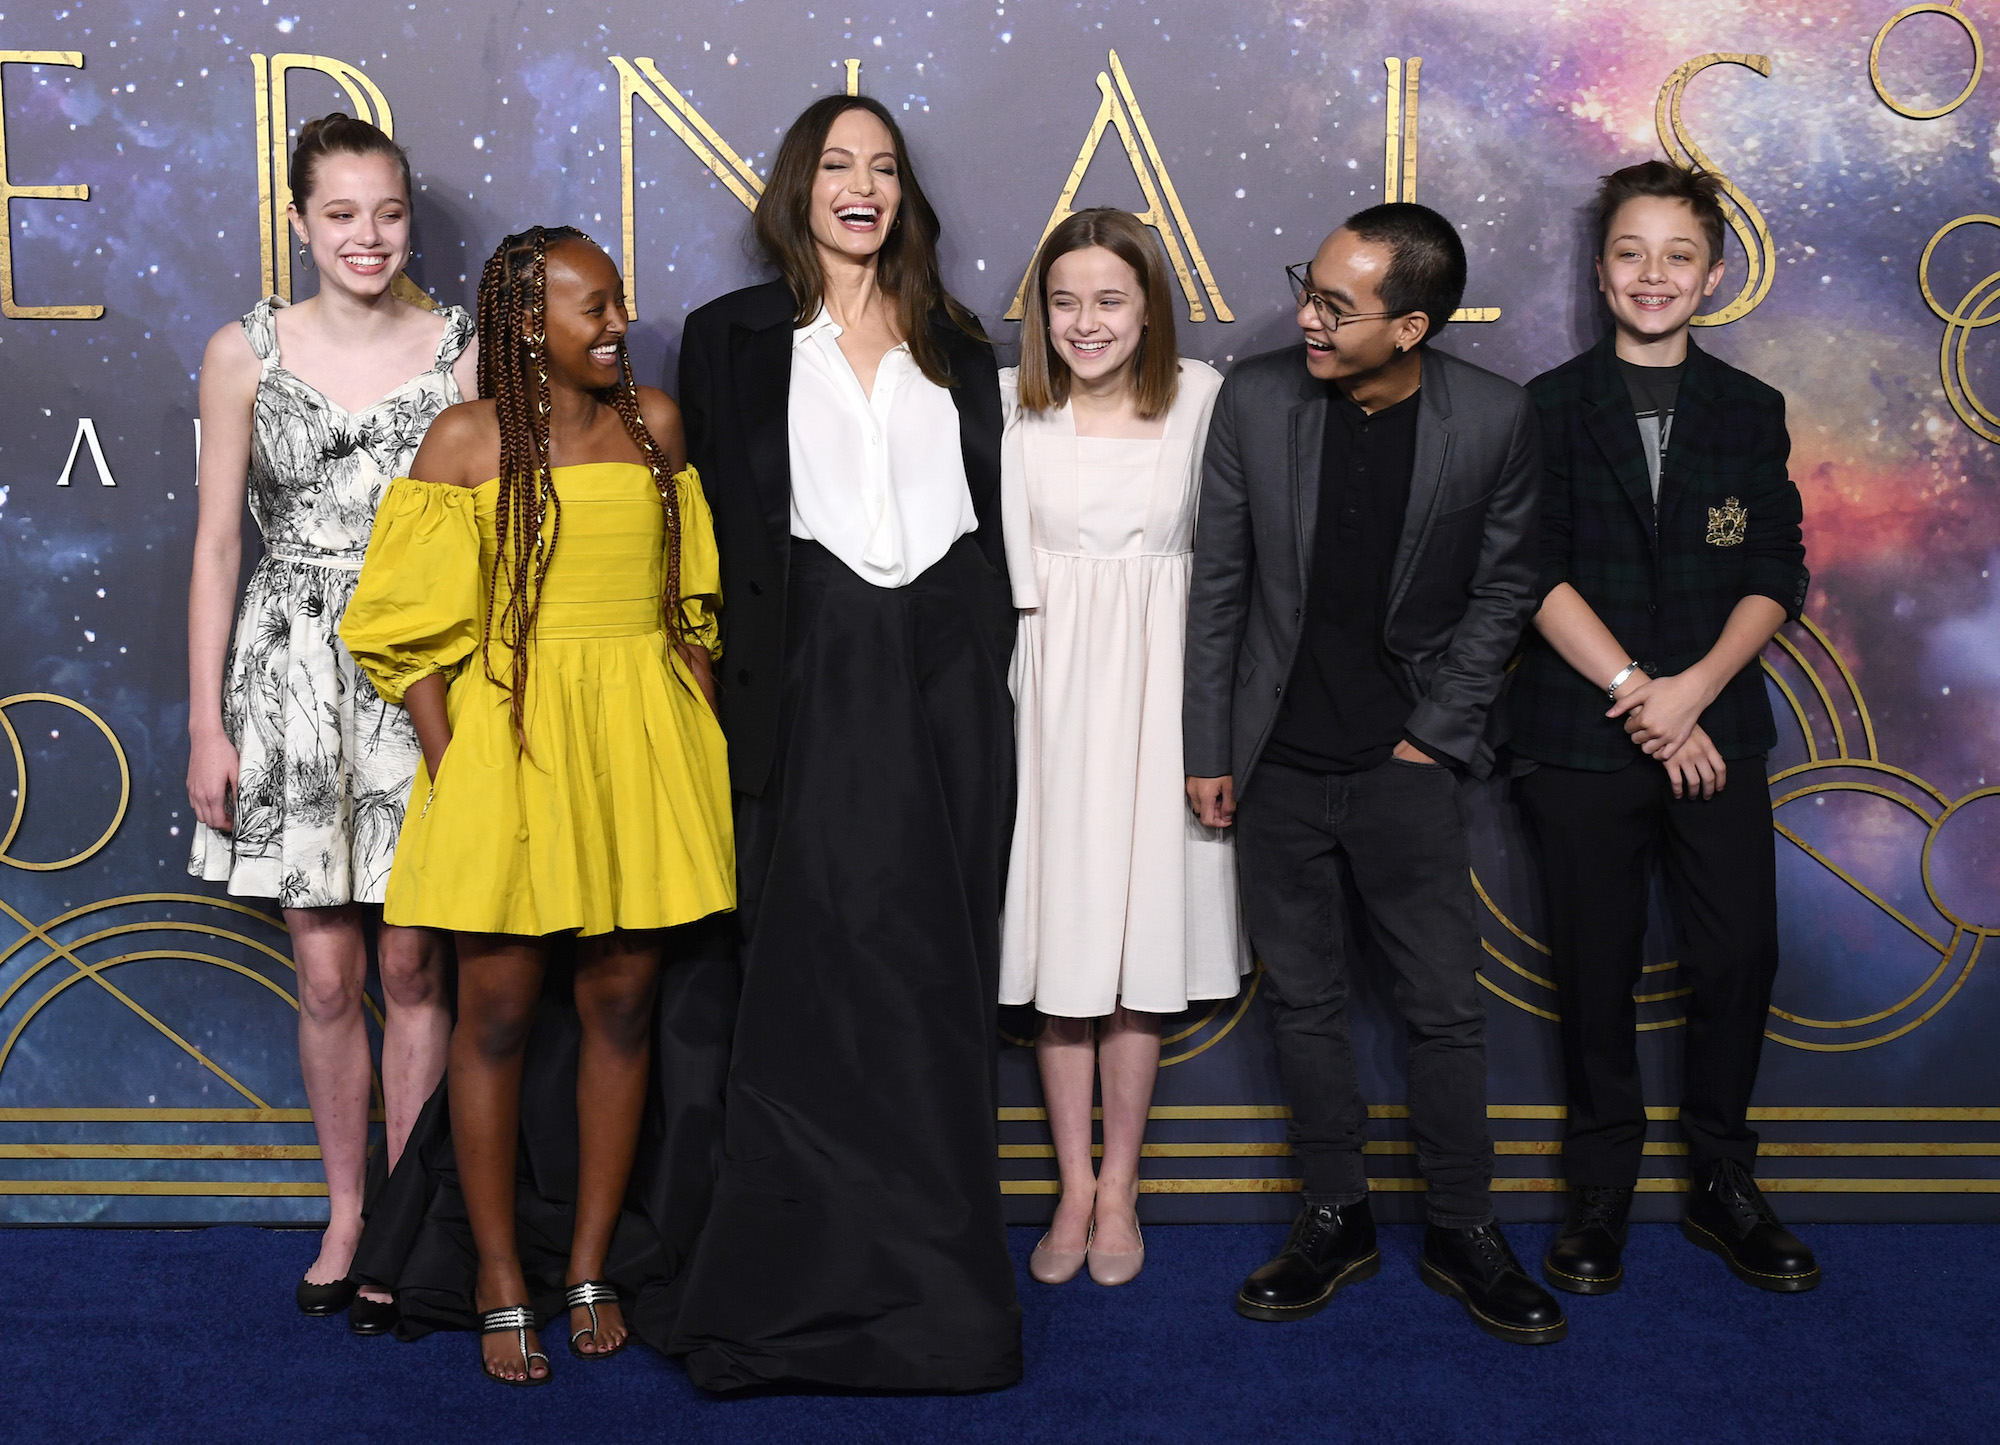 Brad Pitt, Angelina Jolie's Family Album: Pics With 6 Kids